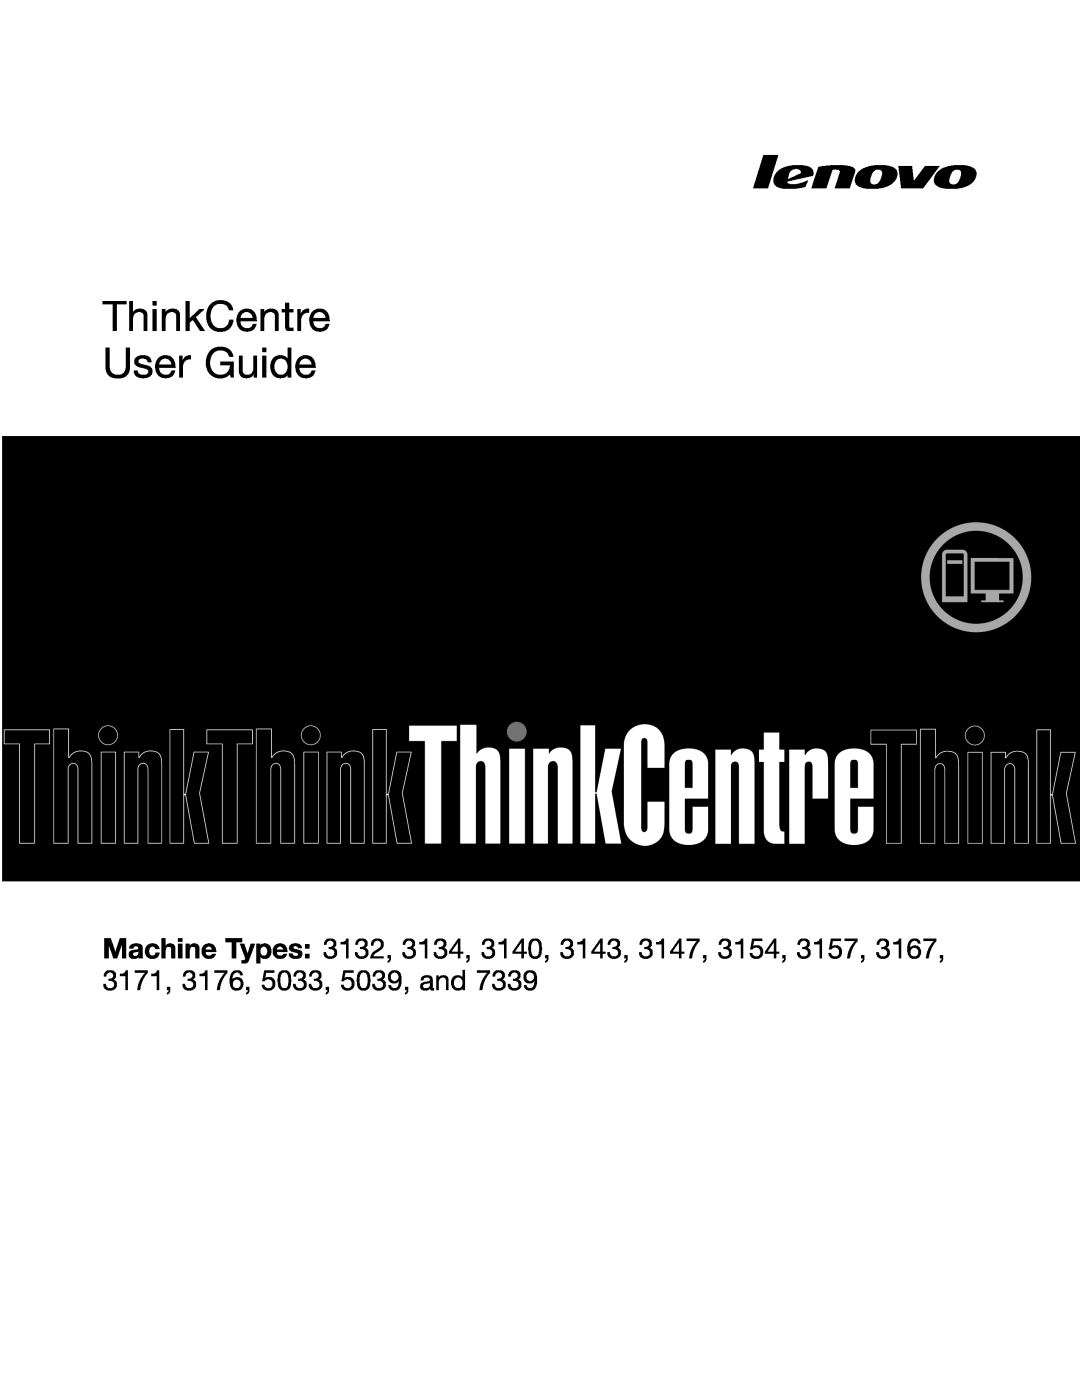 Lenovo 5039, 7339, 5033, 3167, 3171, 3147, 3143, 3154, 3132, 3134, 3157, 3176, 3140 manual ThinkCentre User Guide 